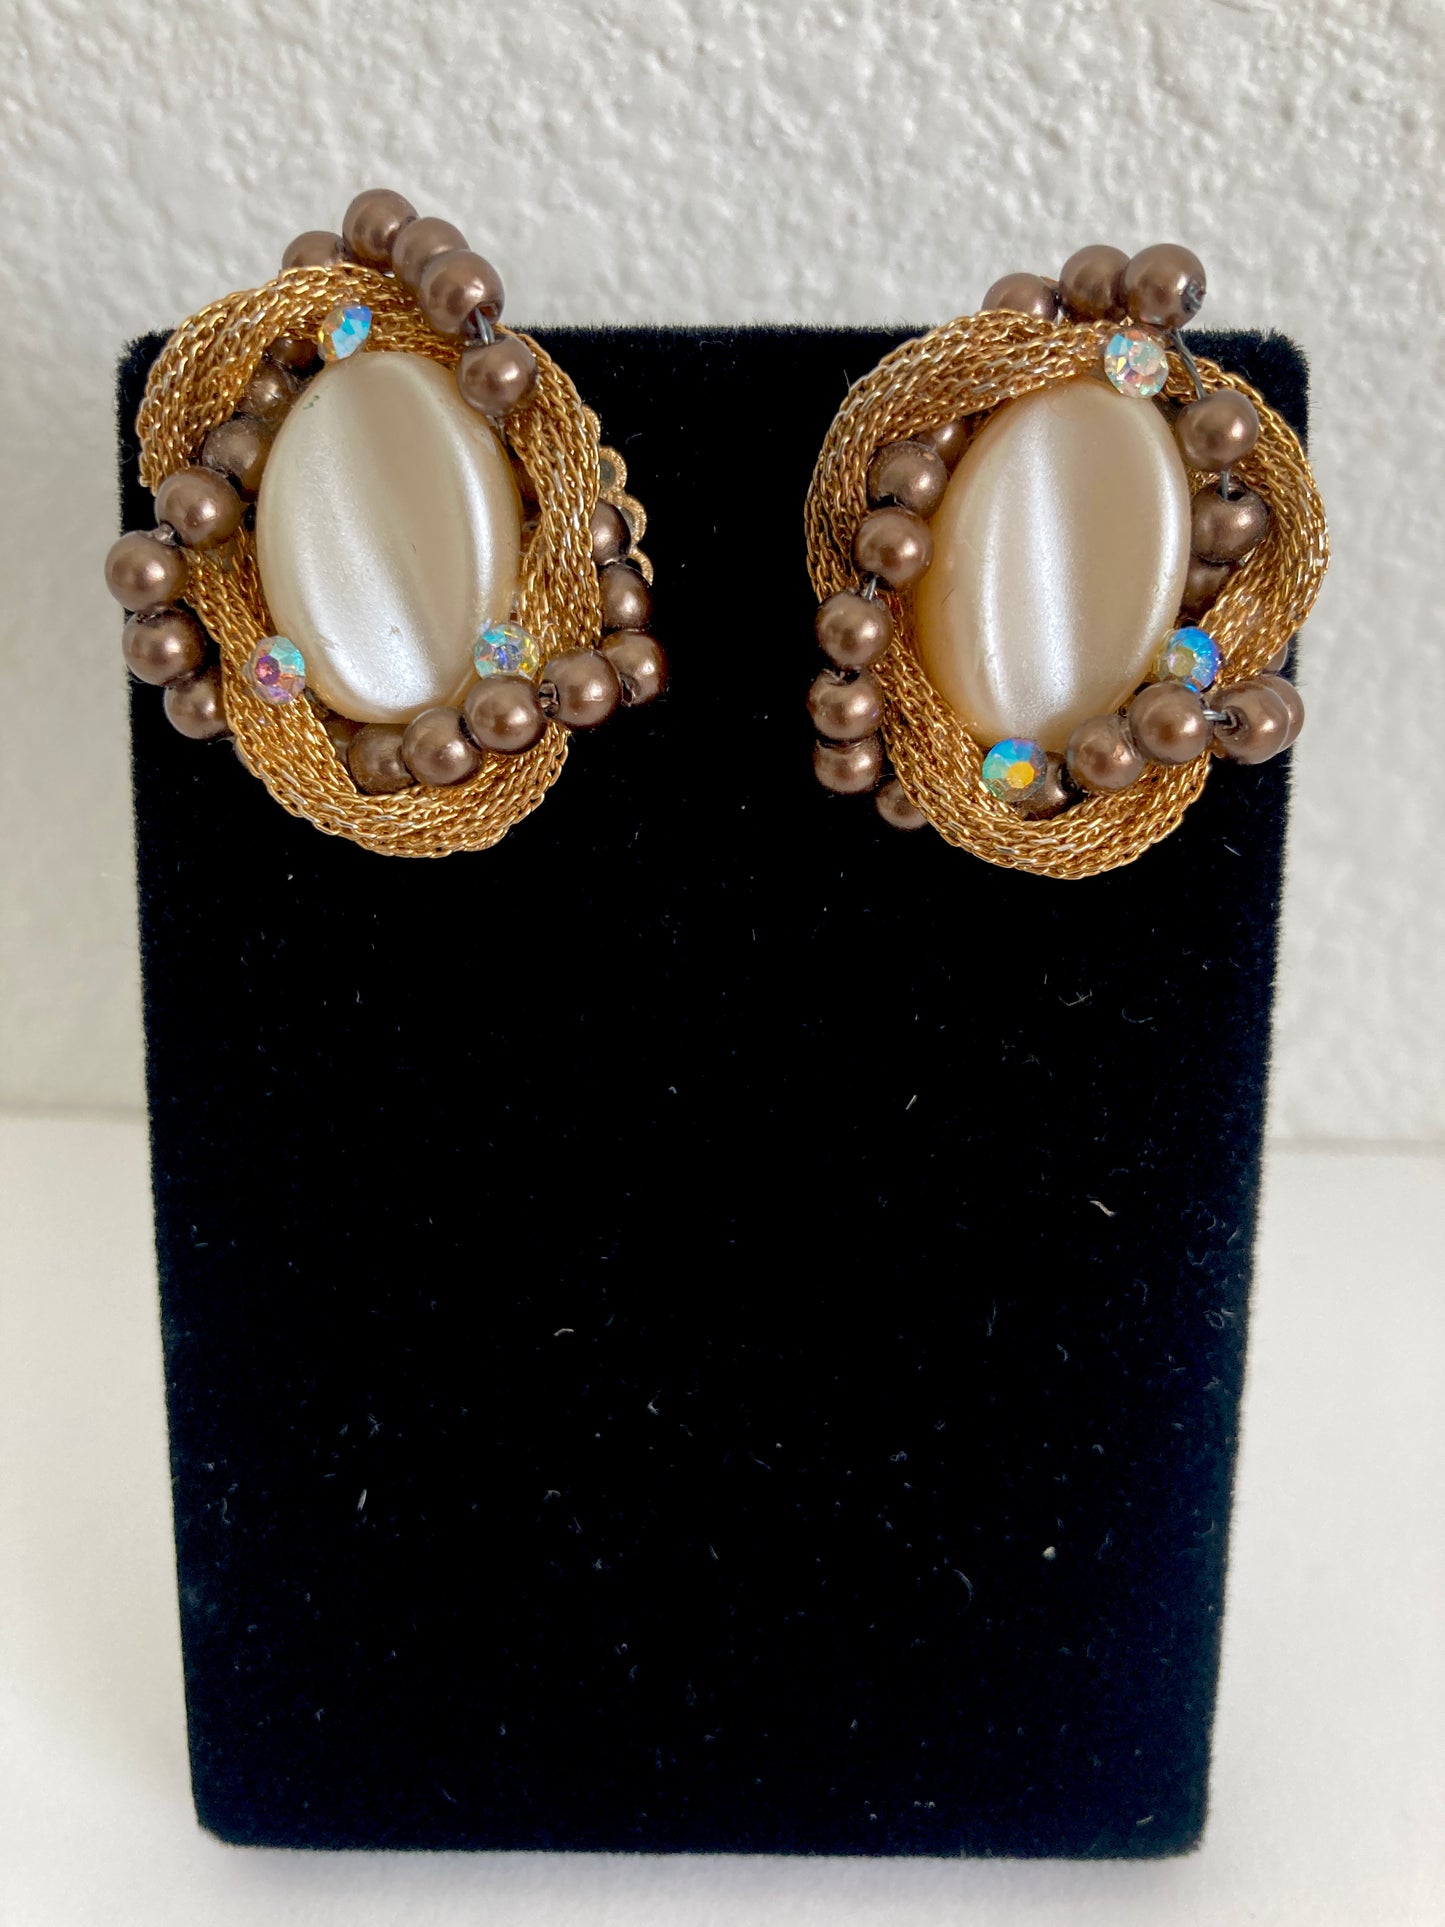 Vintage 1950s Thermoset Earrings Gold Mesh, Pearls, Rhinestones